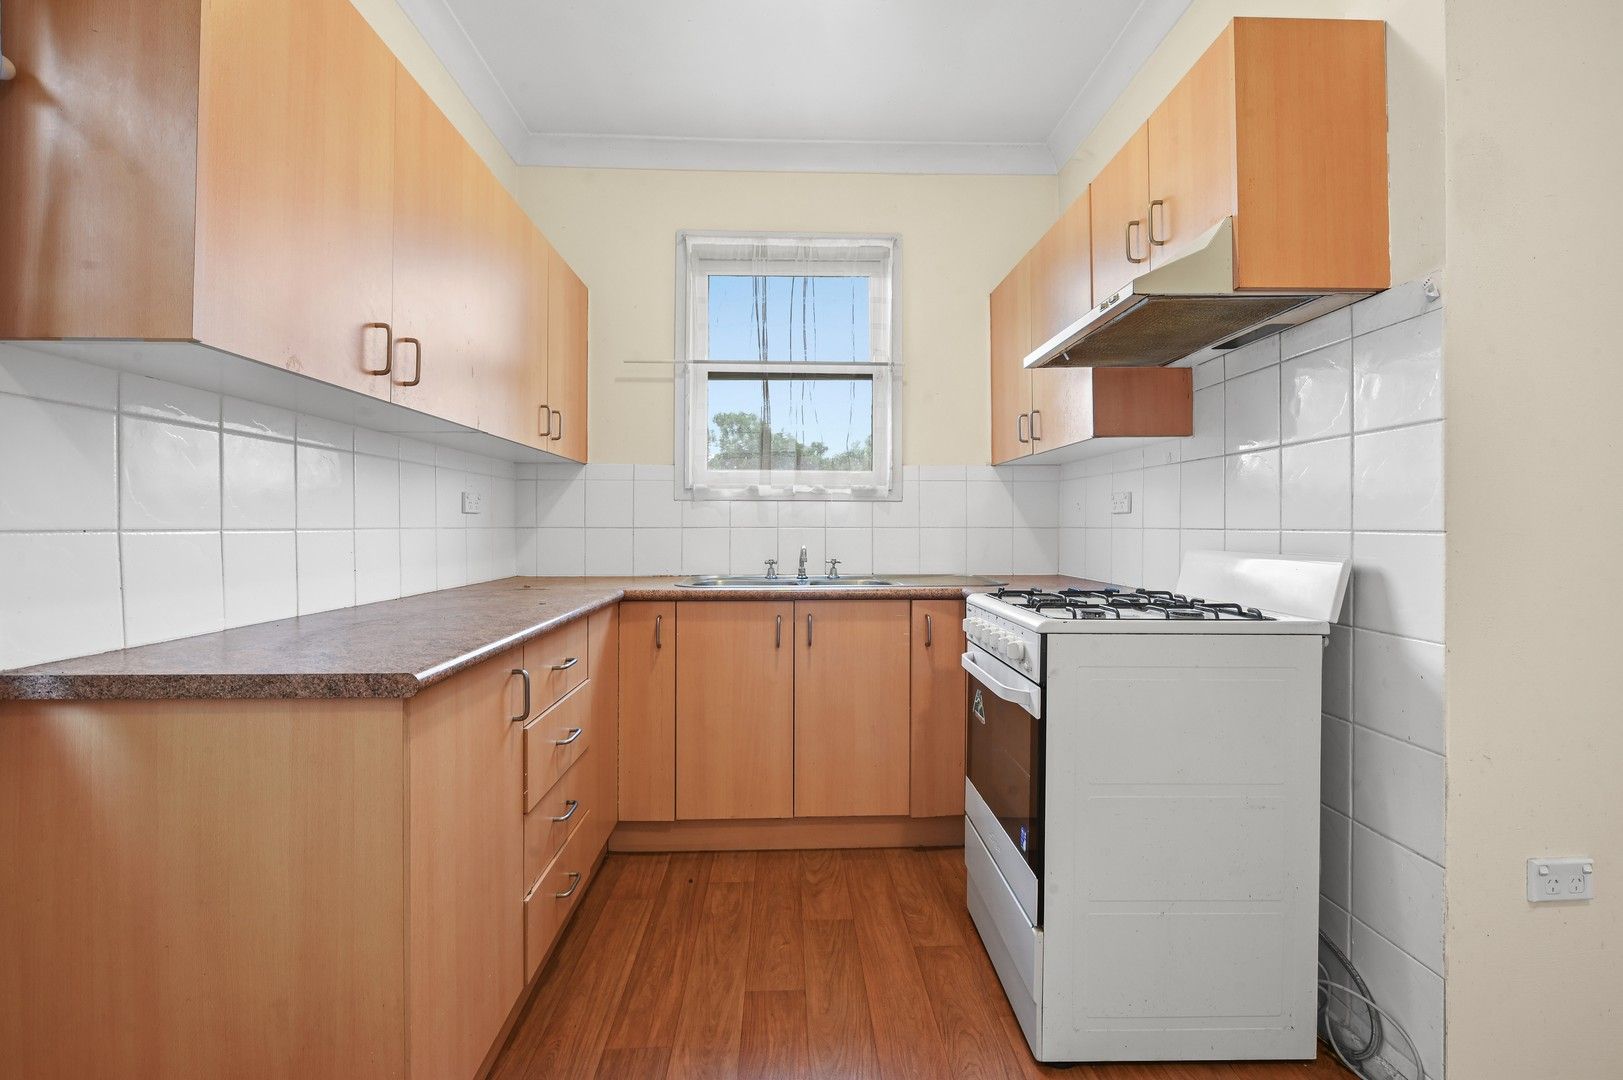 2 bedrooms House in 35 Belmore Street NORTH PARRAMATTA NSW, 2151